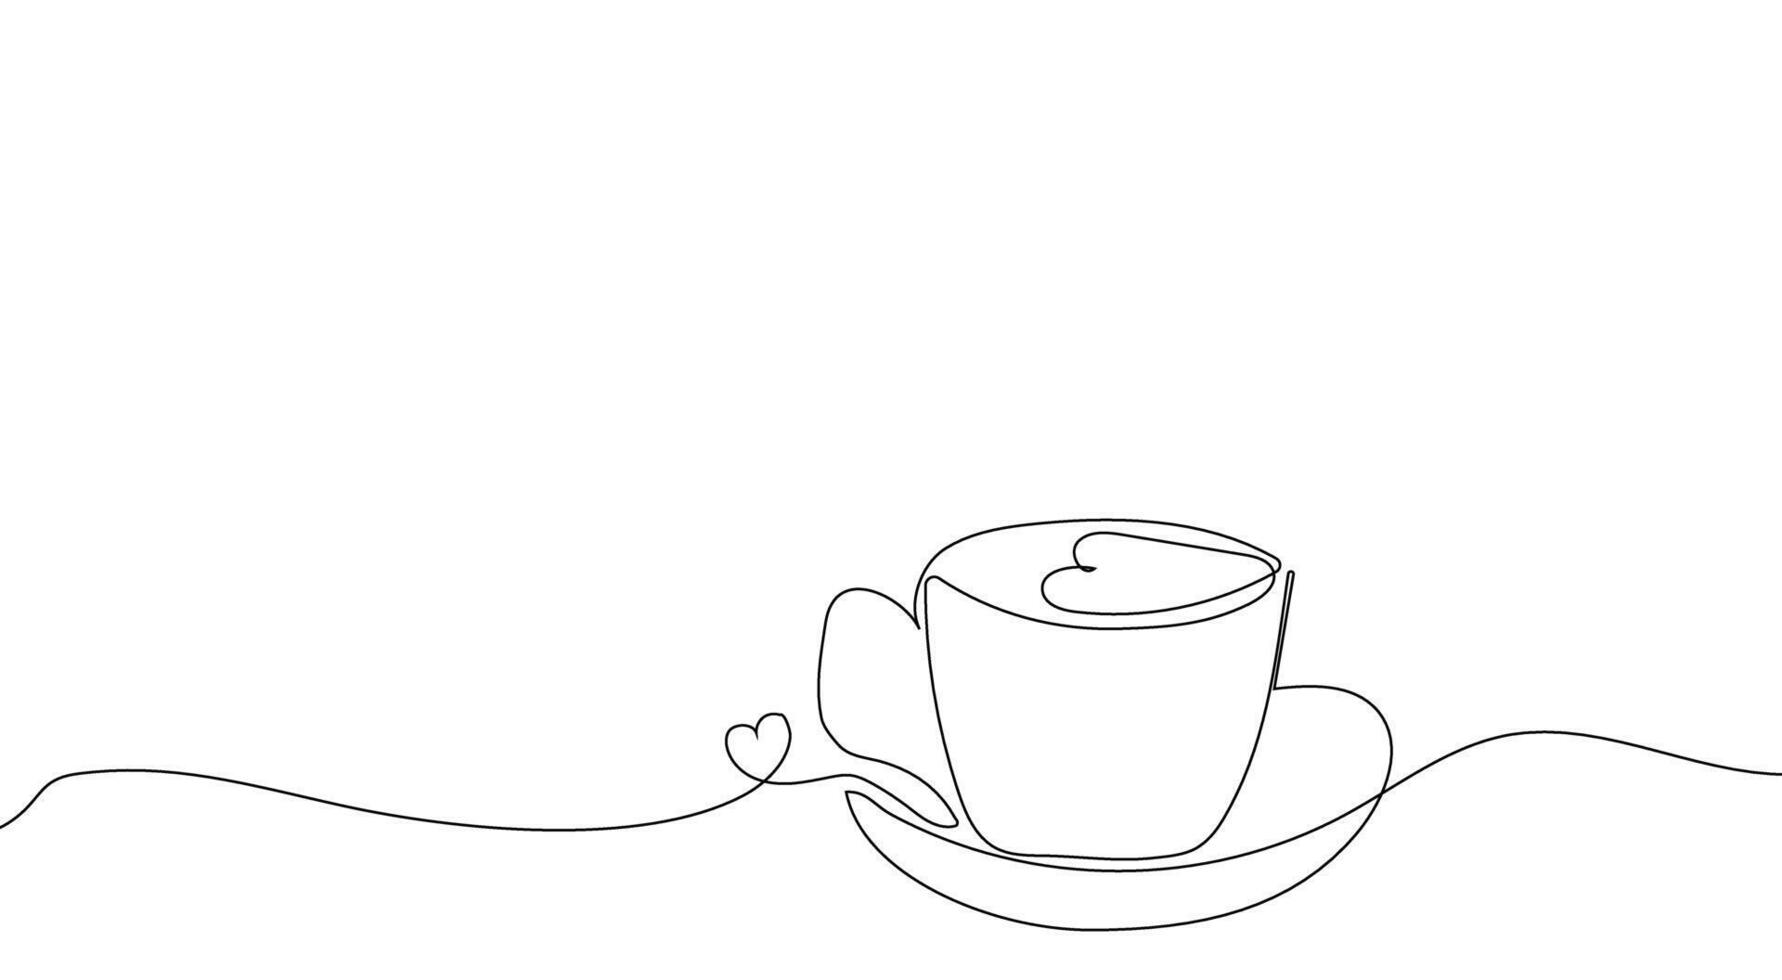 un taza de té o café. delicioso, desayuno o estilo.bocadillo uno continuo línea dibujo. símbolo, bandera, fondo, logo, para impresión. vector